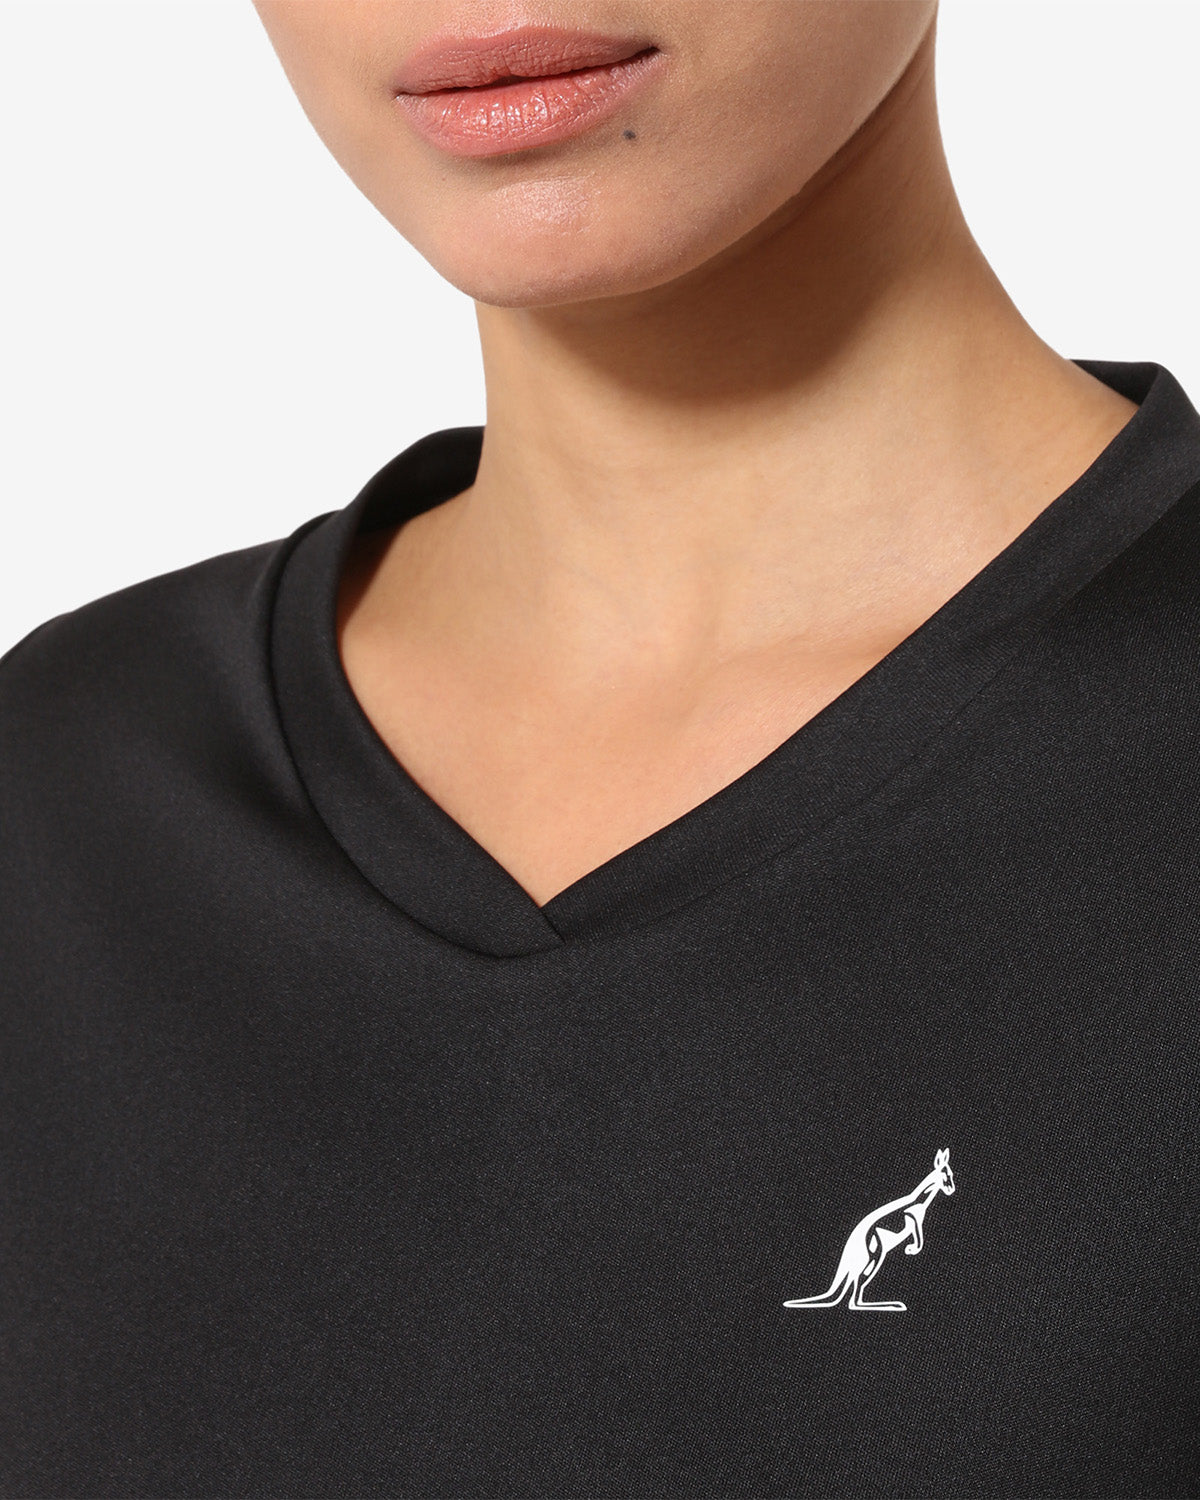 Ace Sleeves T-shirt: Australian Tennis